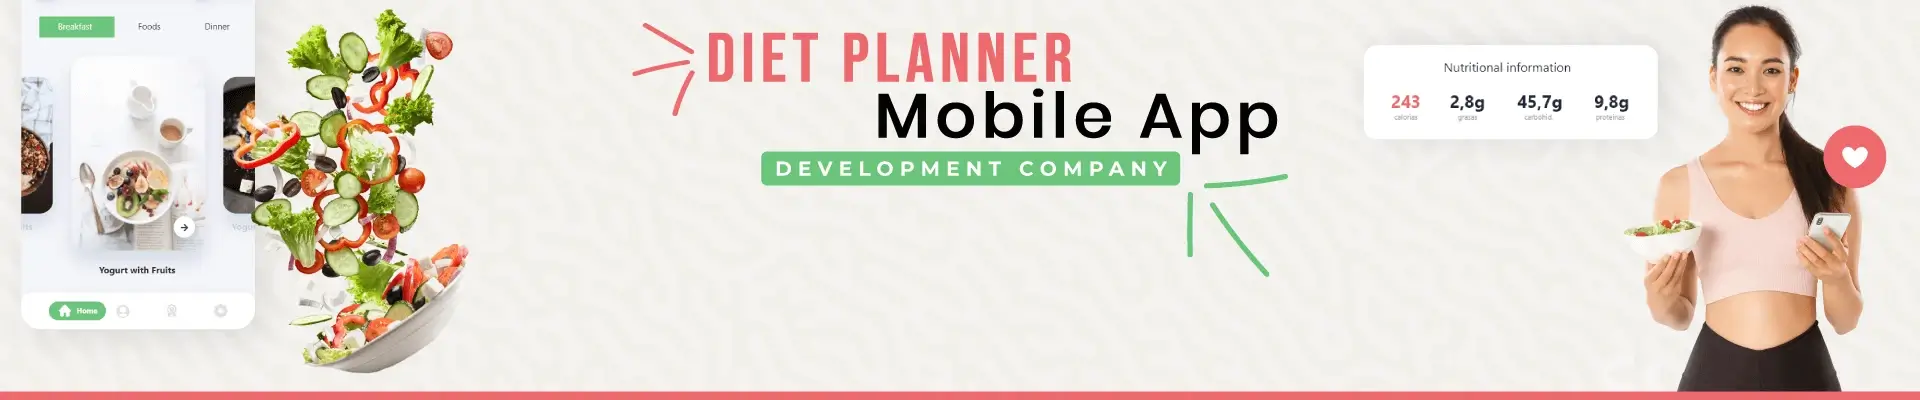 Best Diet Planner Mobile App Development Company | Diet Planner Mobile App Developers For Hire